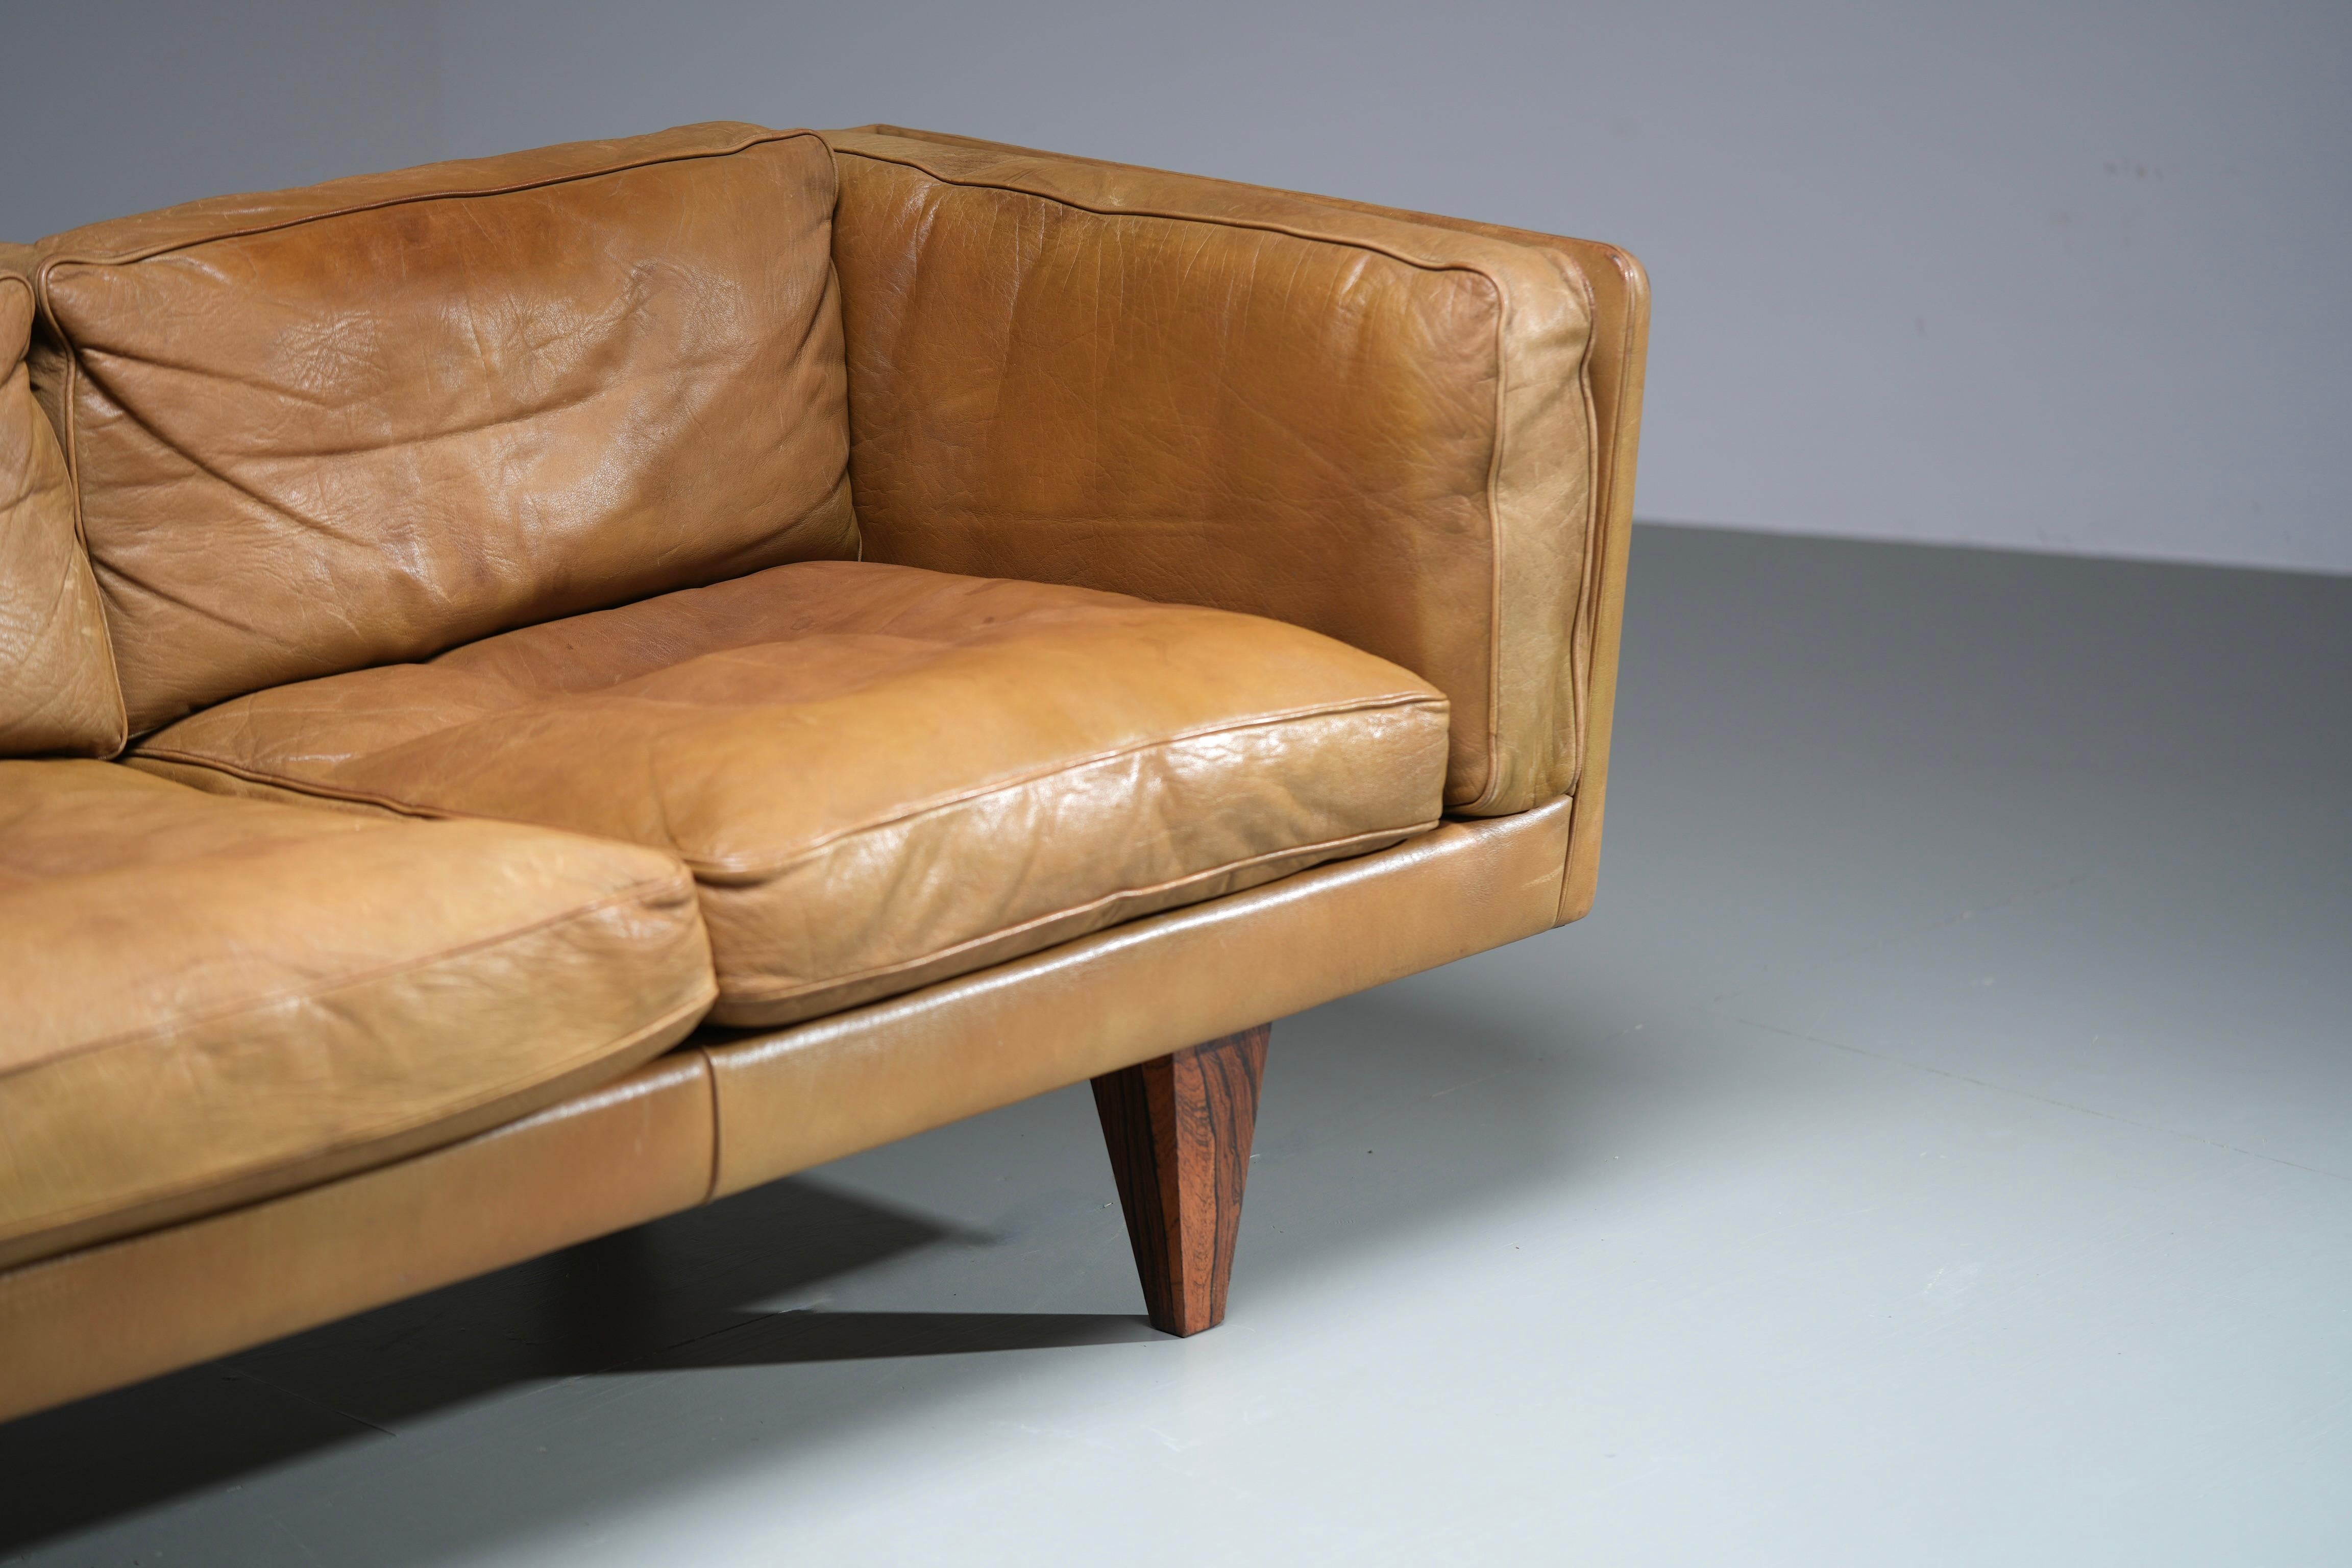 Illum Wikkelsø Dreisitziges Sofa 'V11' aus cognacfarbenem Leder, Dänemark, 1960er Jahre im Angebot 3